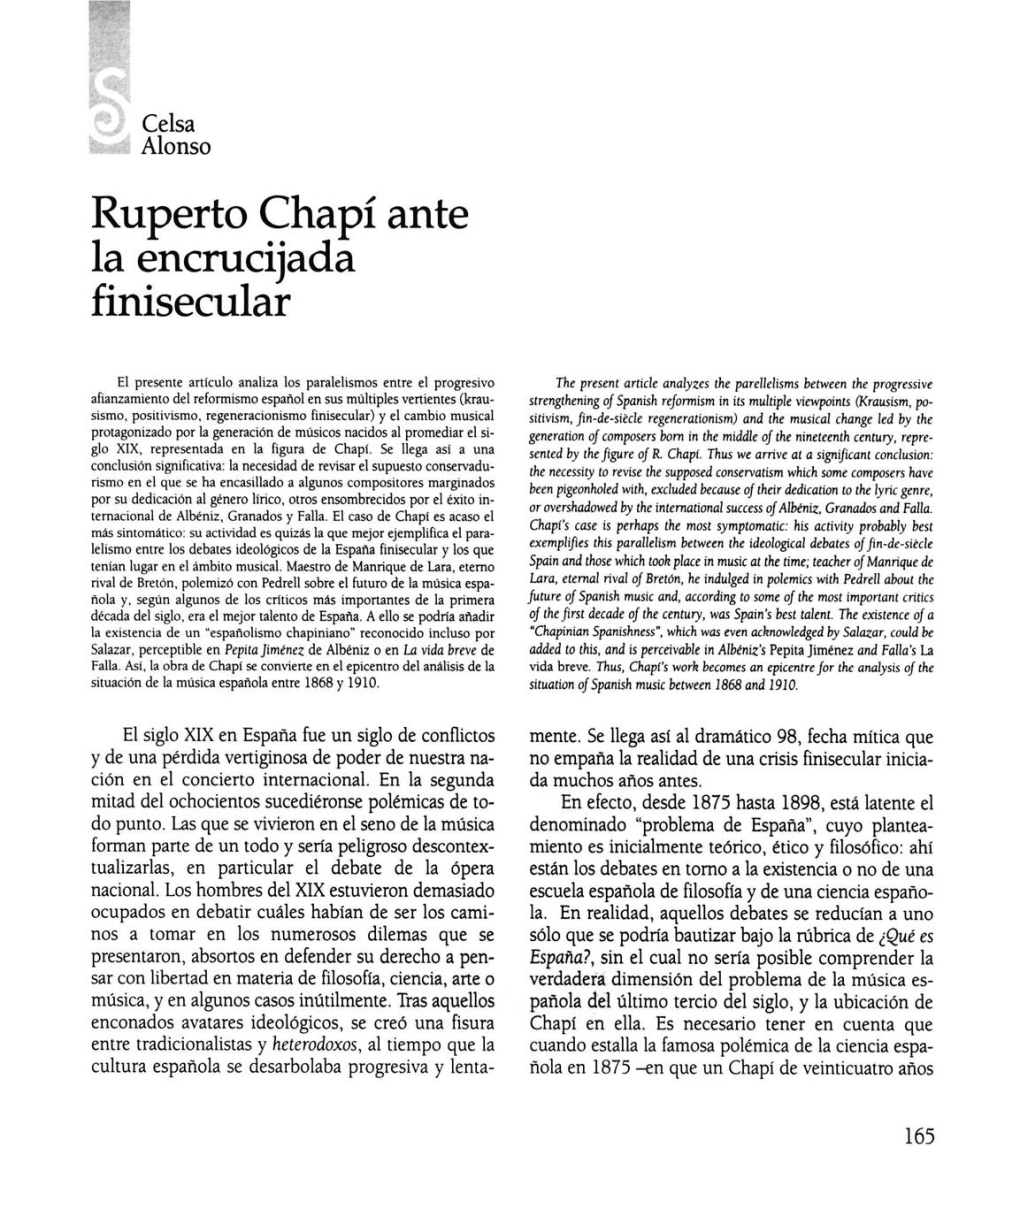 Ruperto Chapí Ante La Encrucijada Finisecular